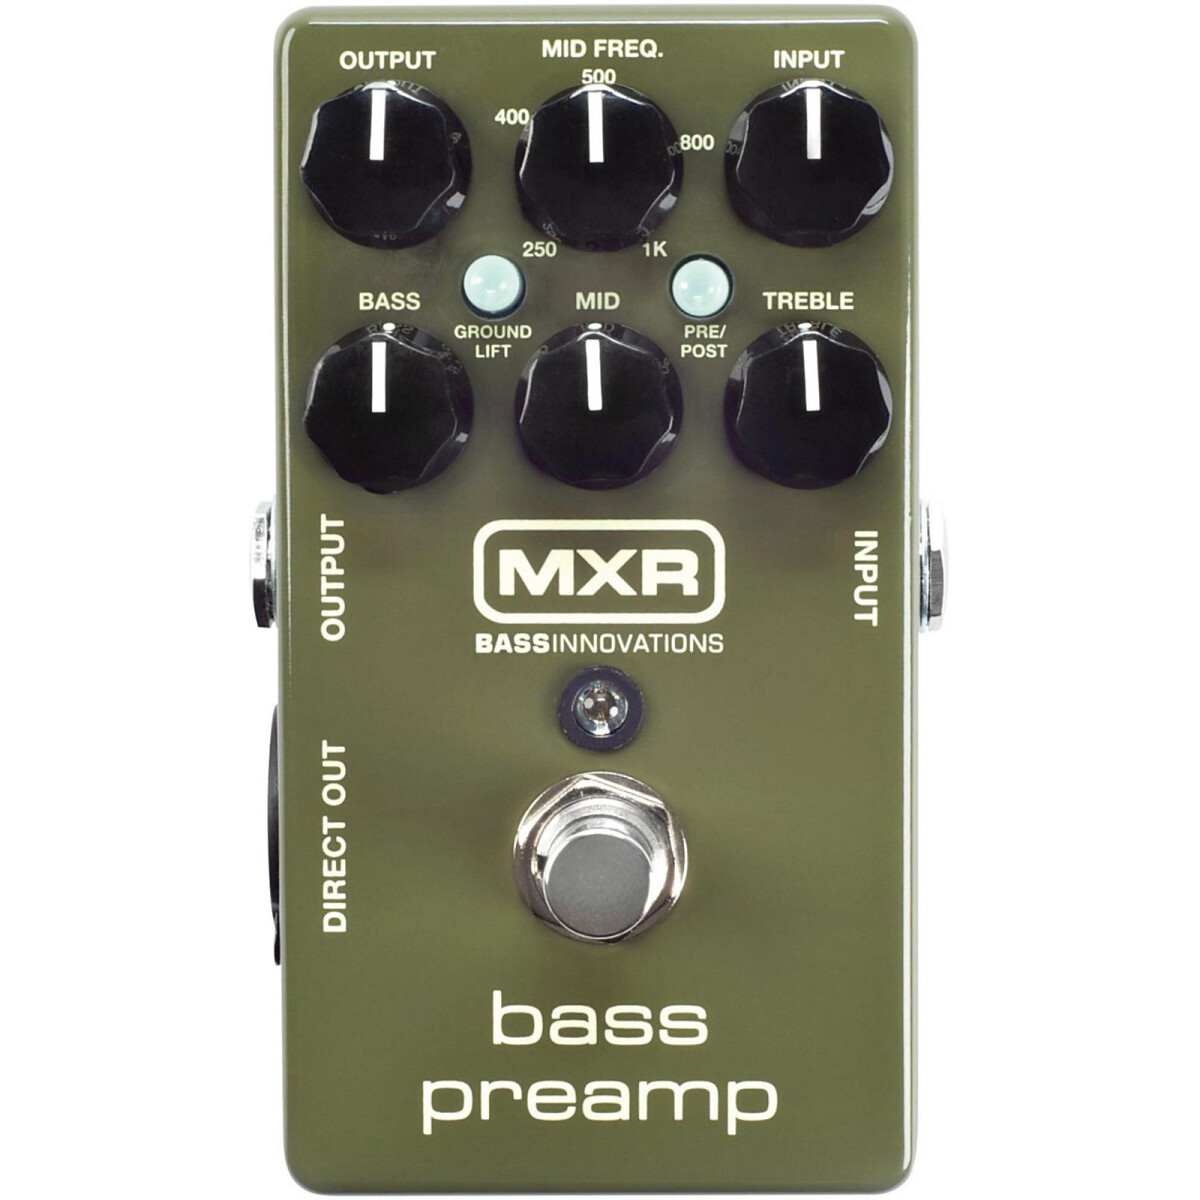 [NAMM] Finally some info on the MXR Bass Preamp